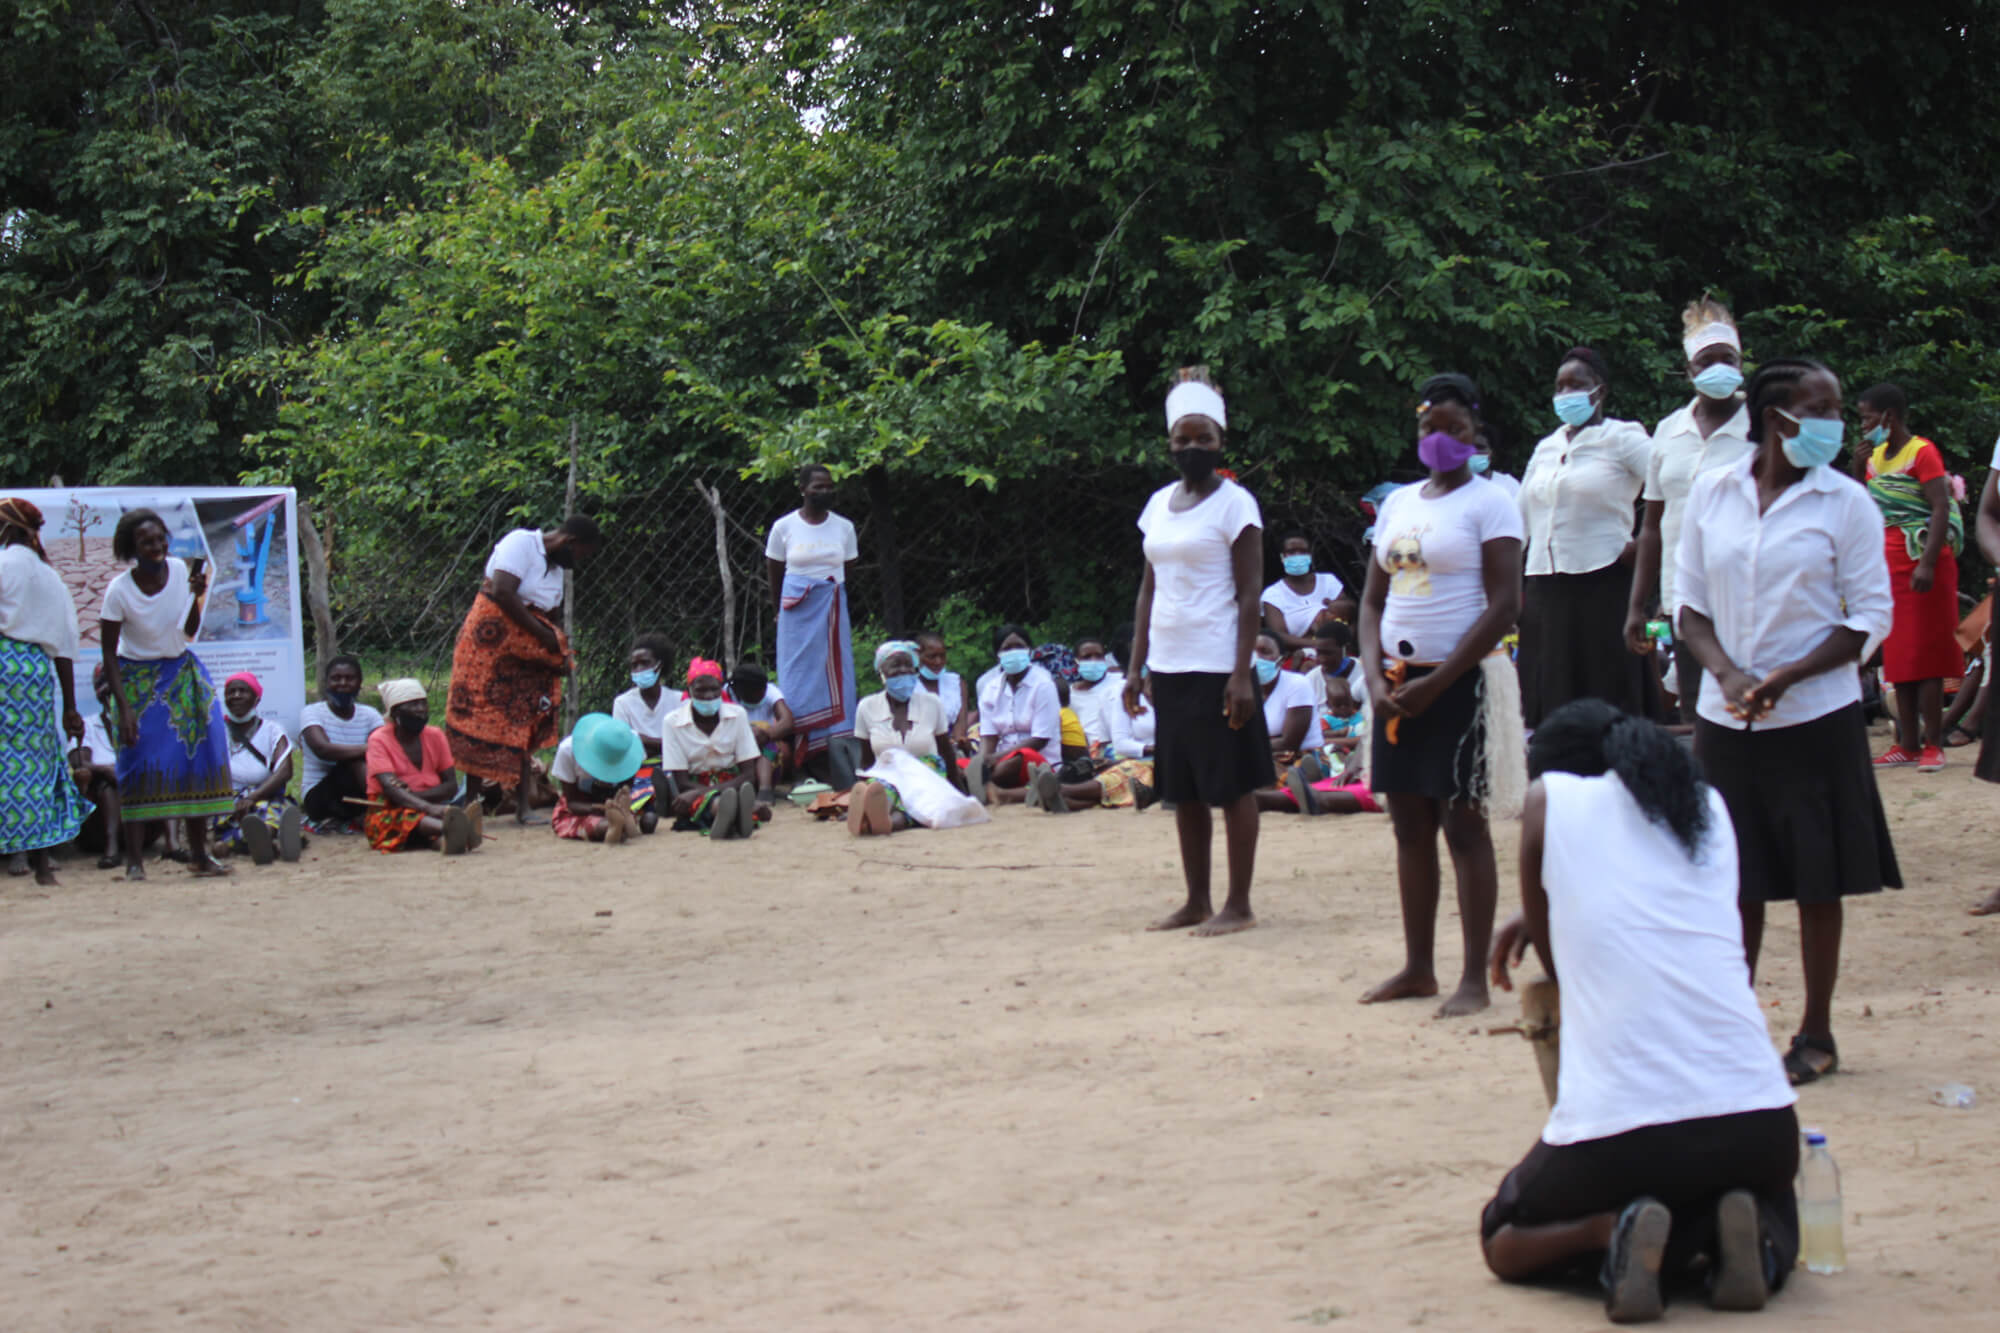 The Tumvwanane community health club, from Siangwemu village, performs a health-related drama.